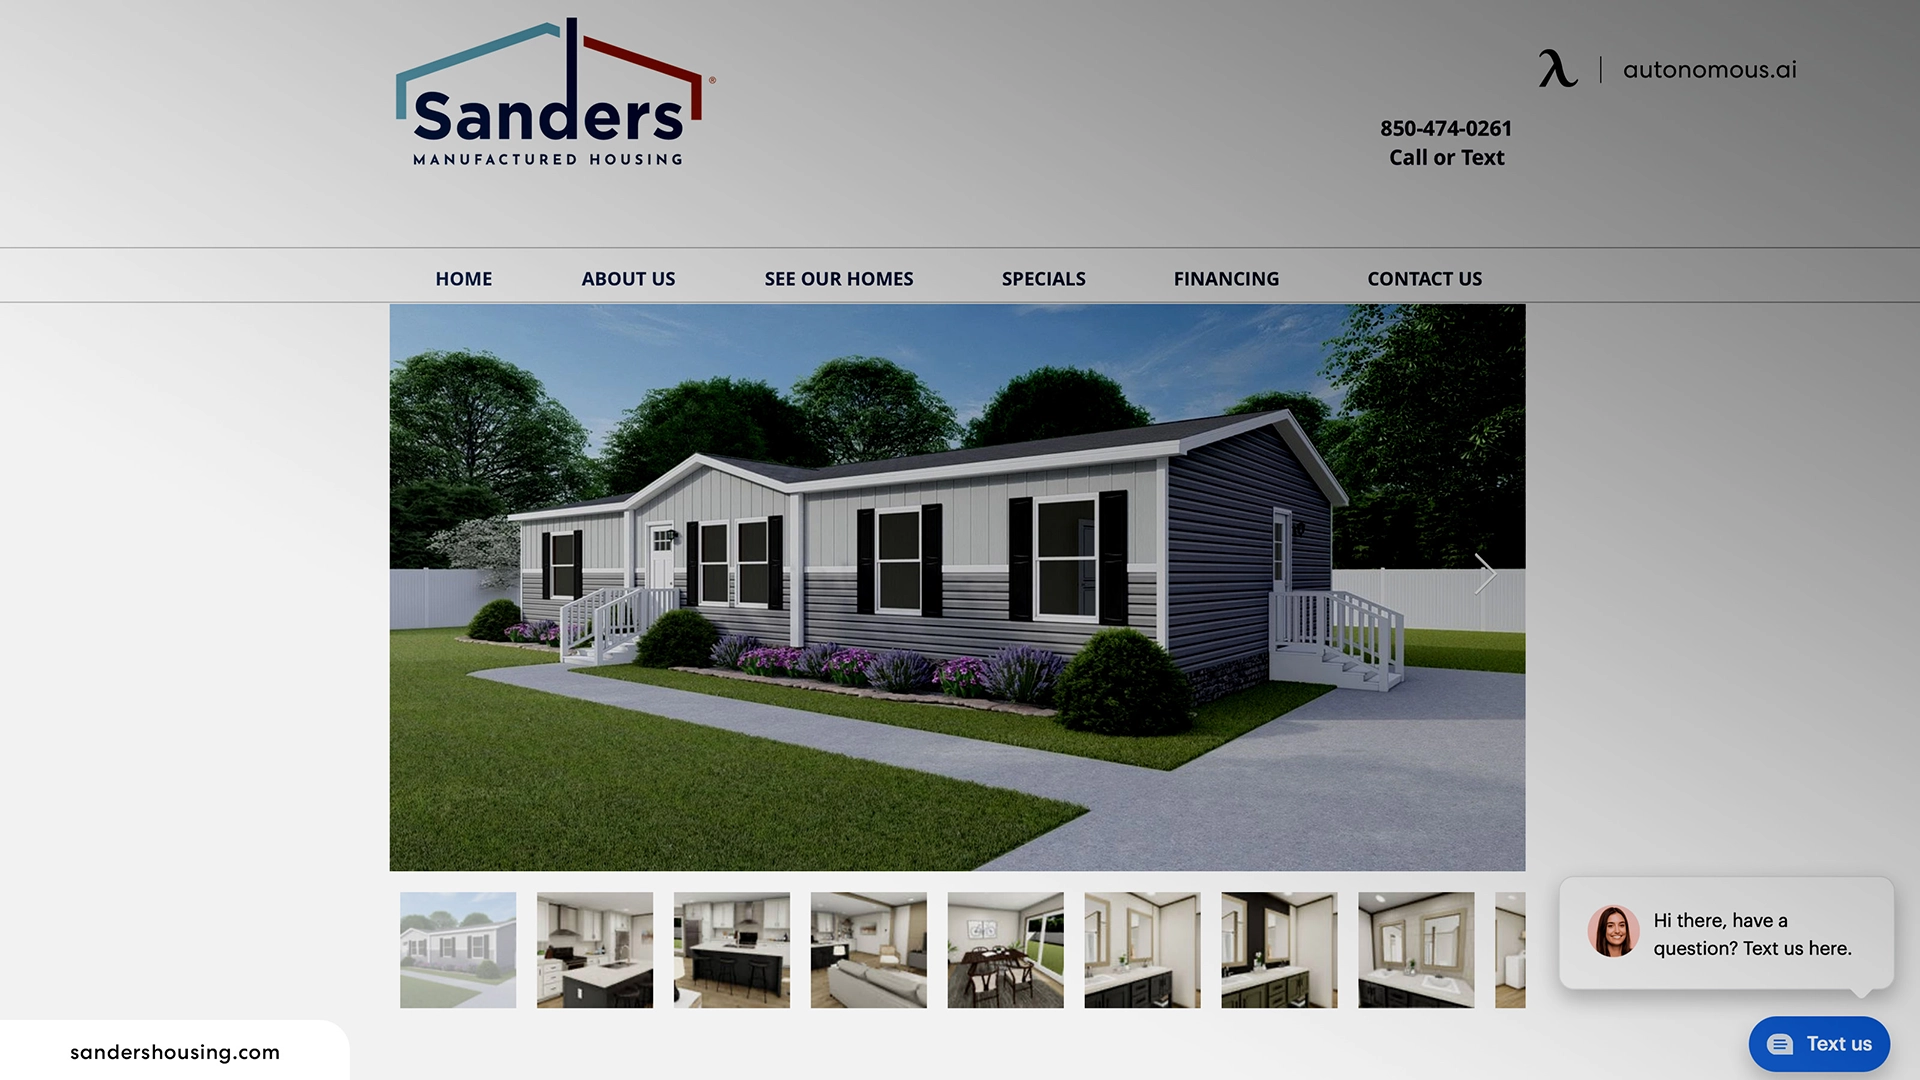 Sanders Manufactured Housing